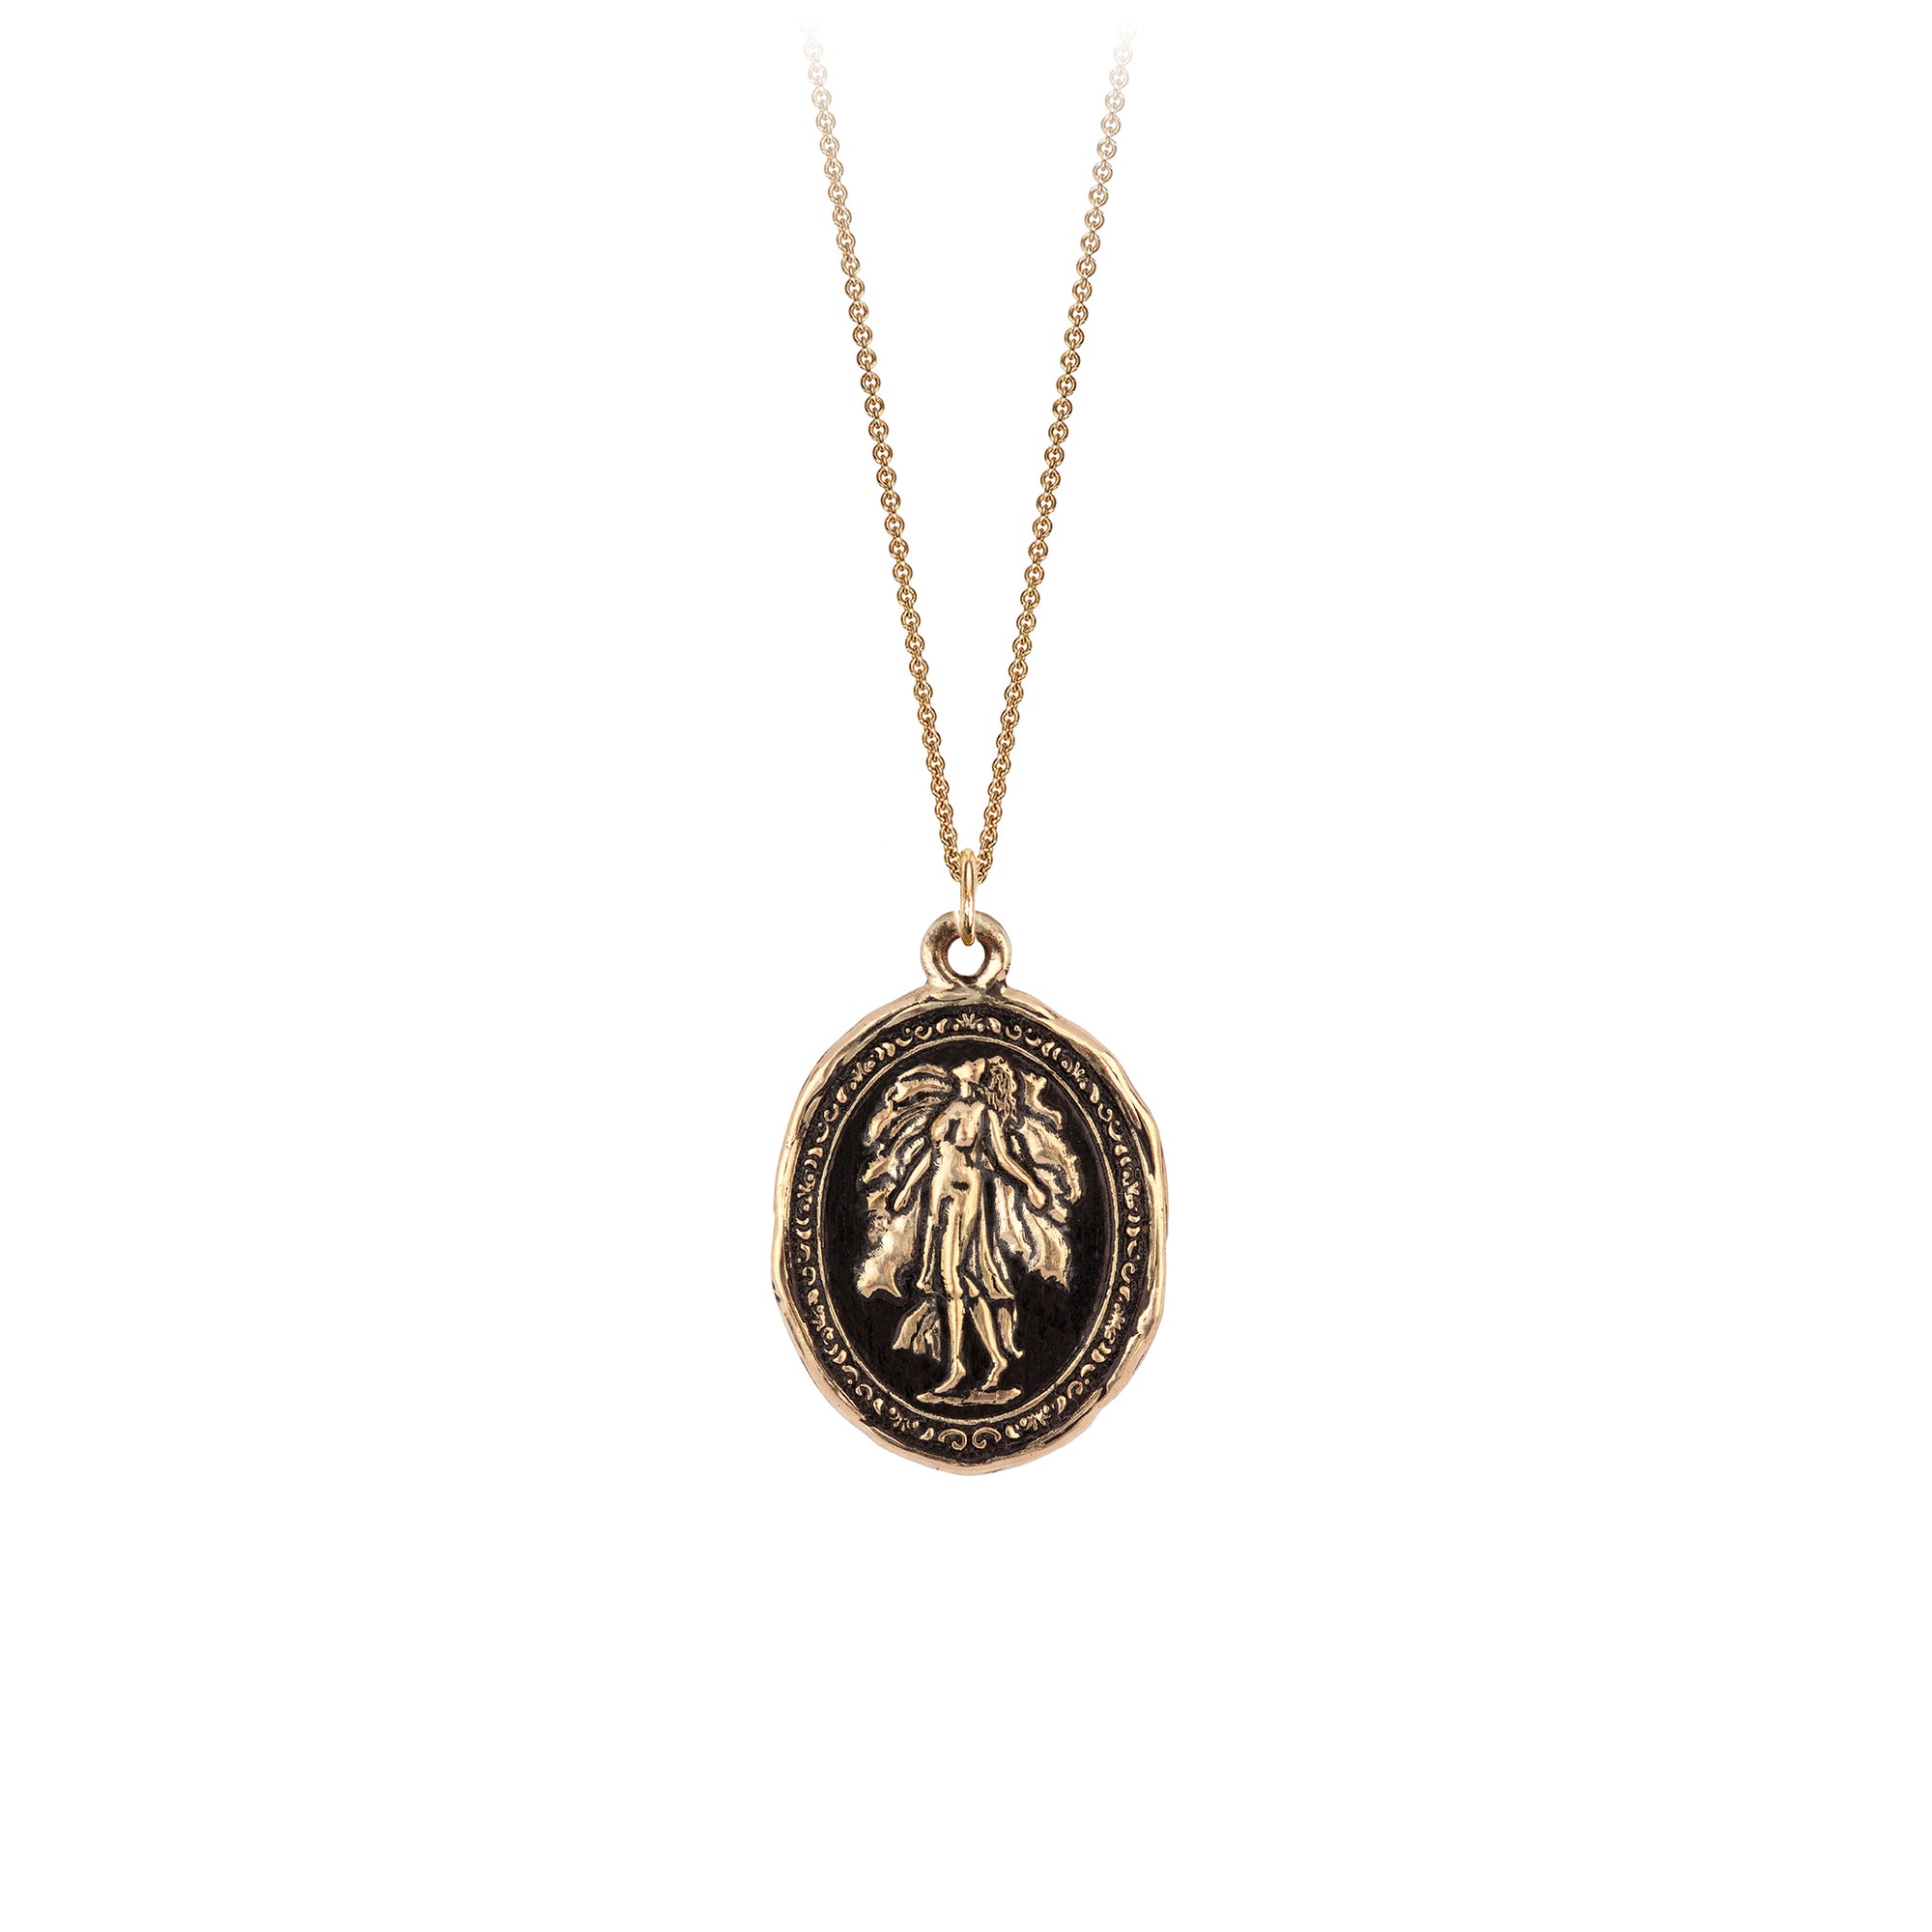 A 14k gold chain featuring our 14k gold Gaia goddess talisman.